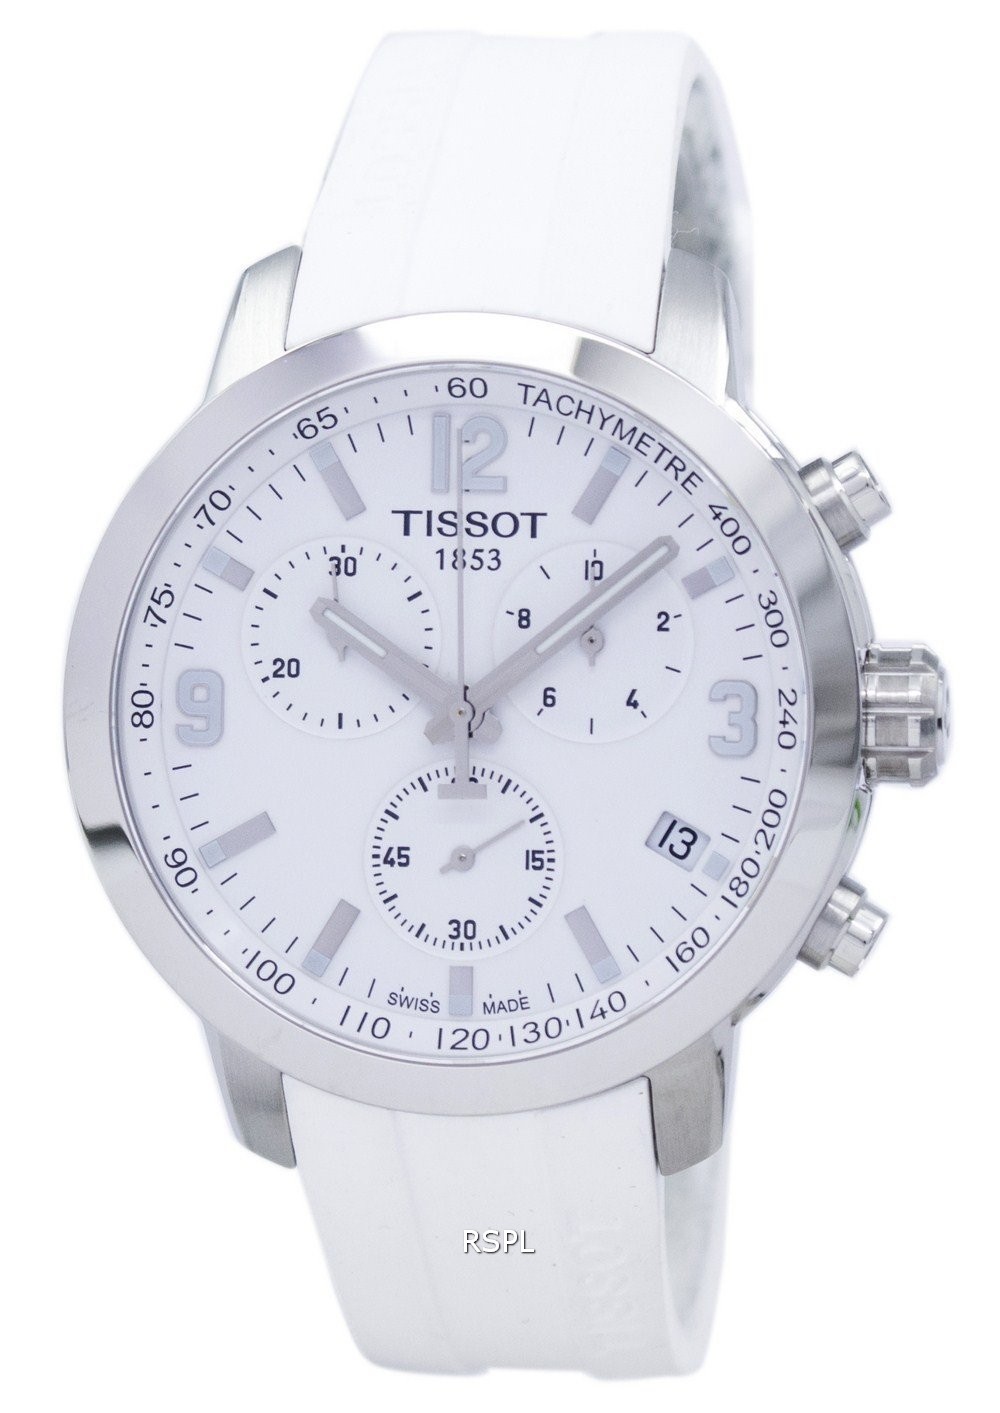 Tissot T-Sport PRC 200 Chronograph Tachymeter Men’s Watch.jpg  by Jason